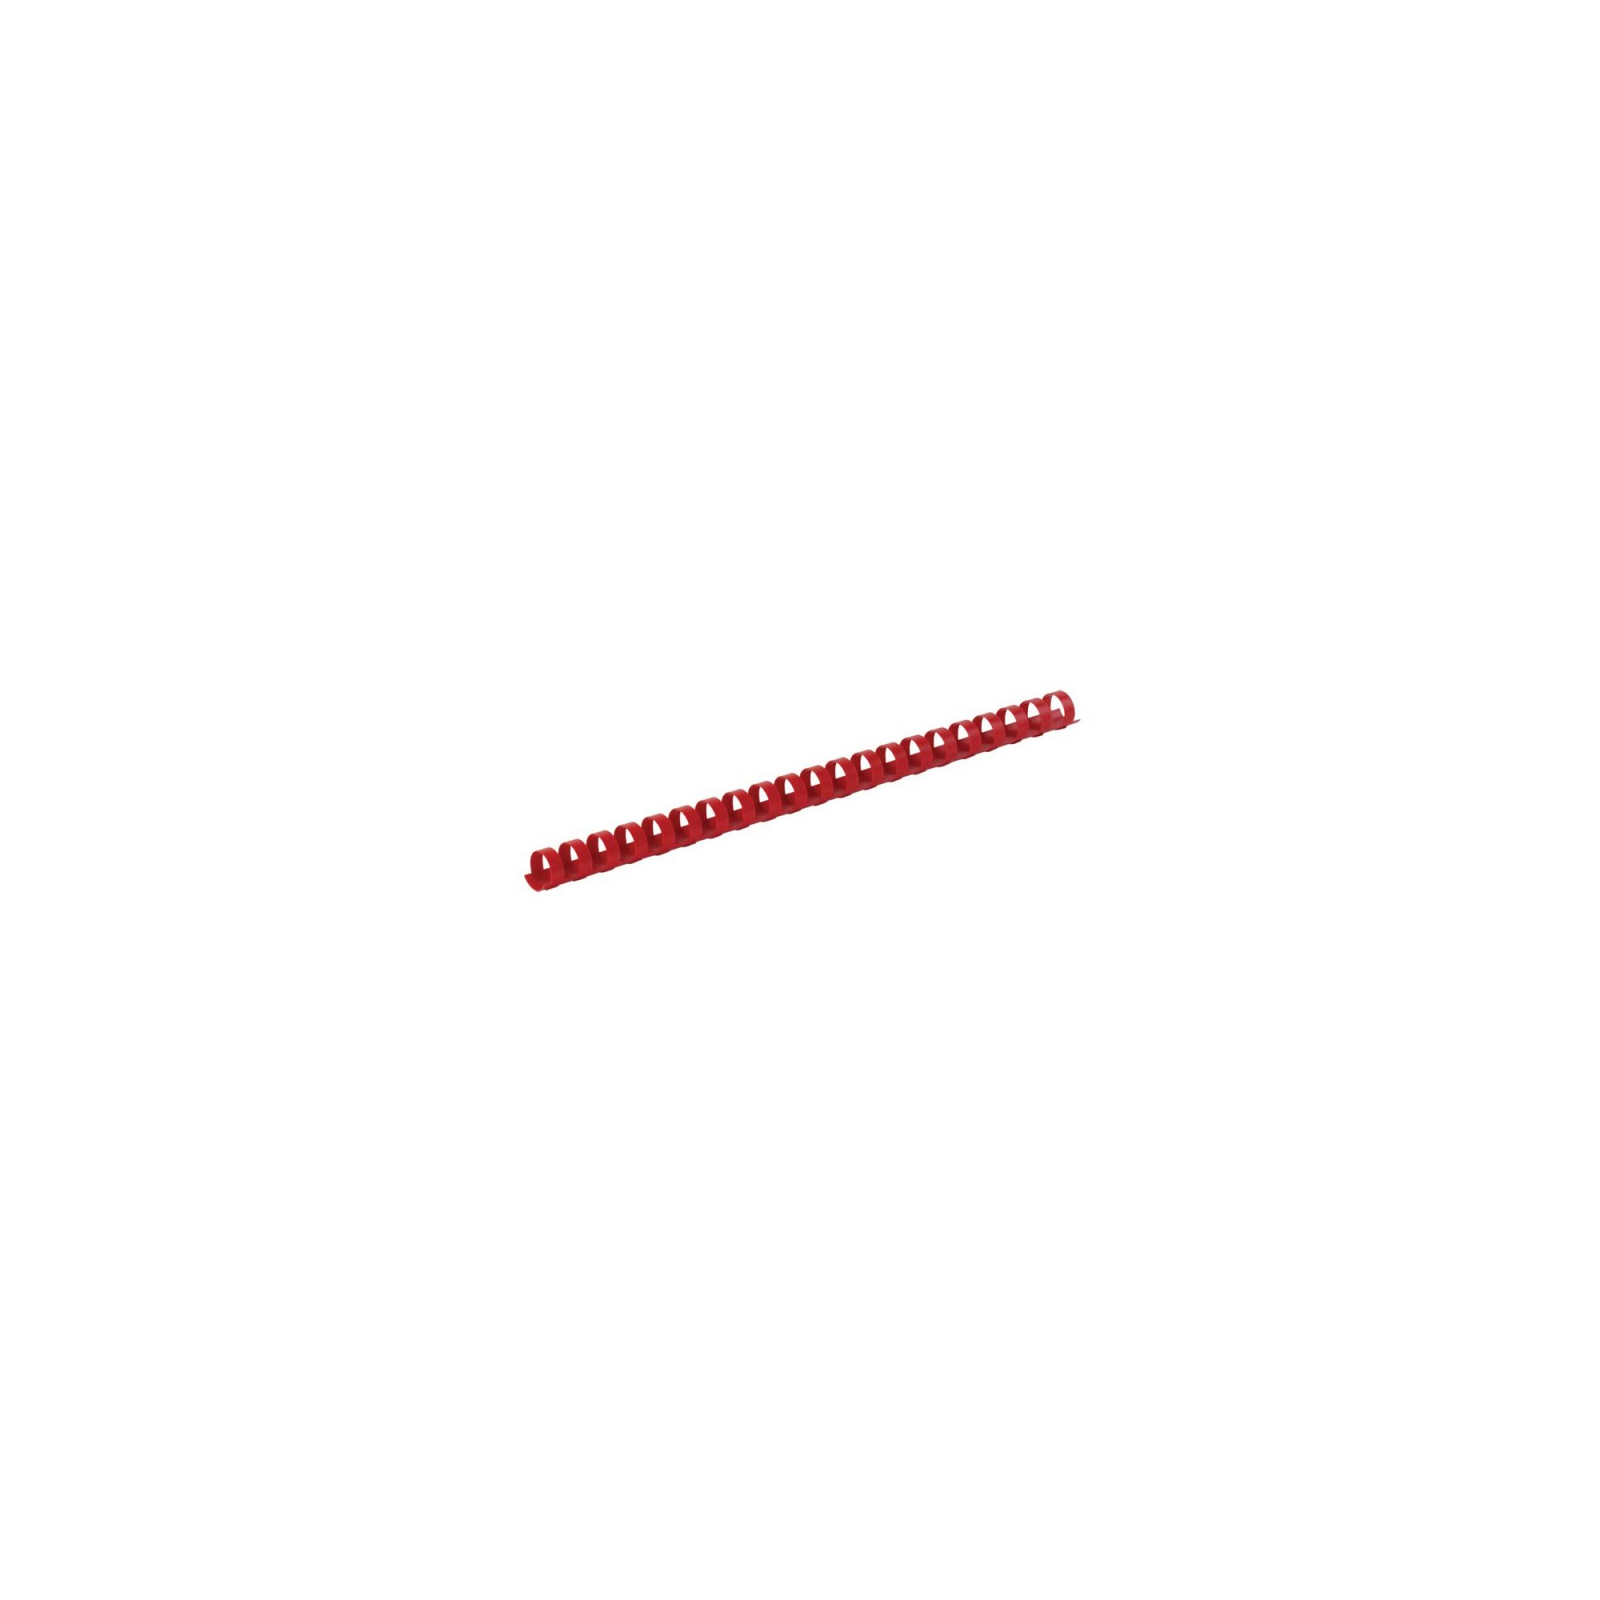 Пружина для переплета bindMARK пл. 6мм (100 шт.) красная (43154)